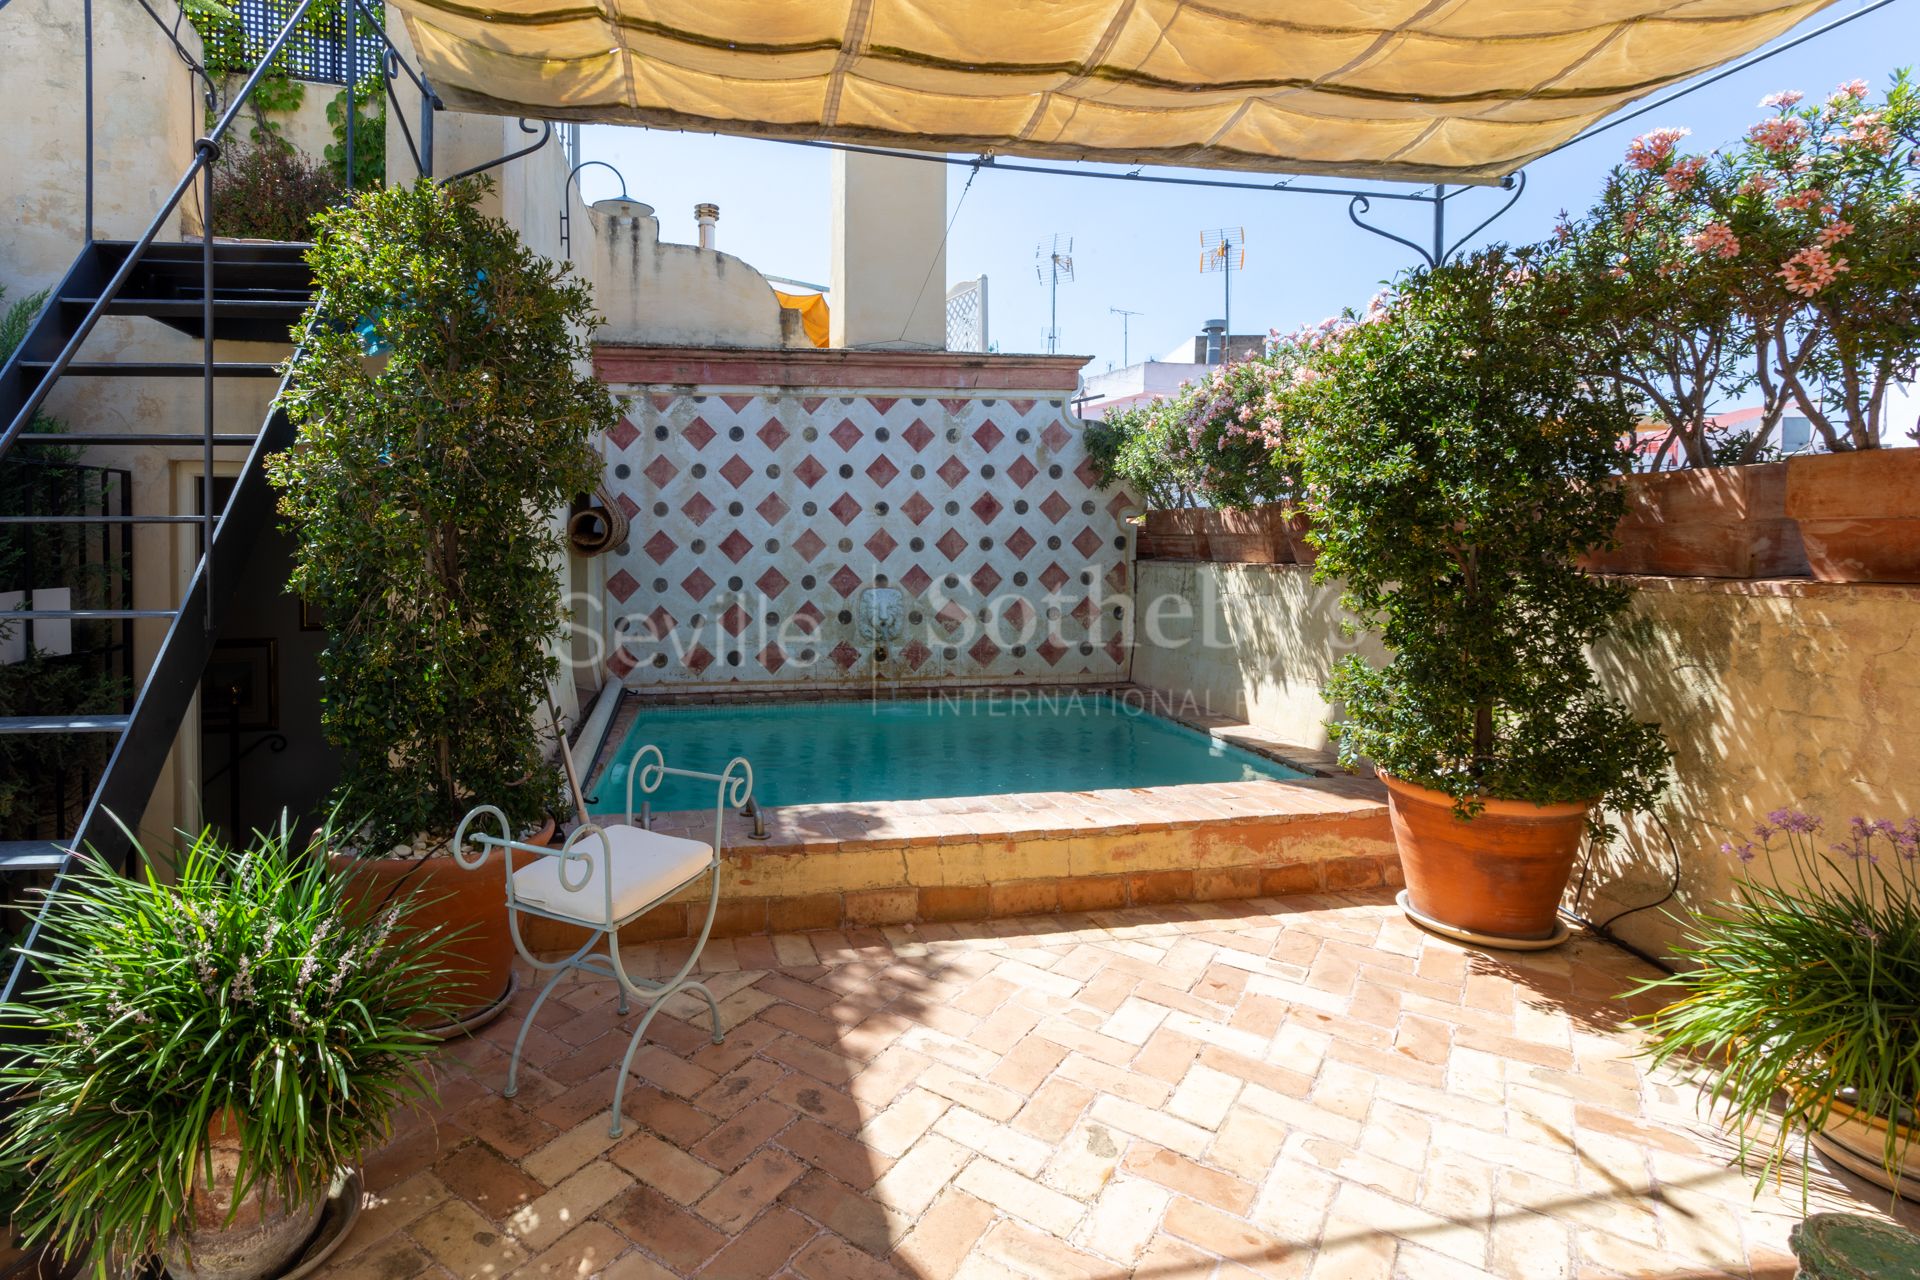 Casa señorial totalmente restaurada con piscina en zona privilegiada del centro de Sevilla